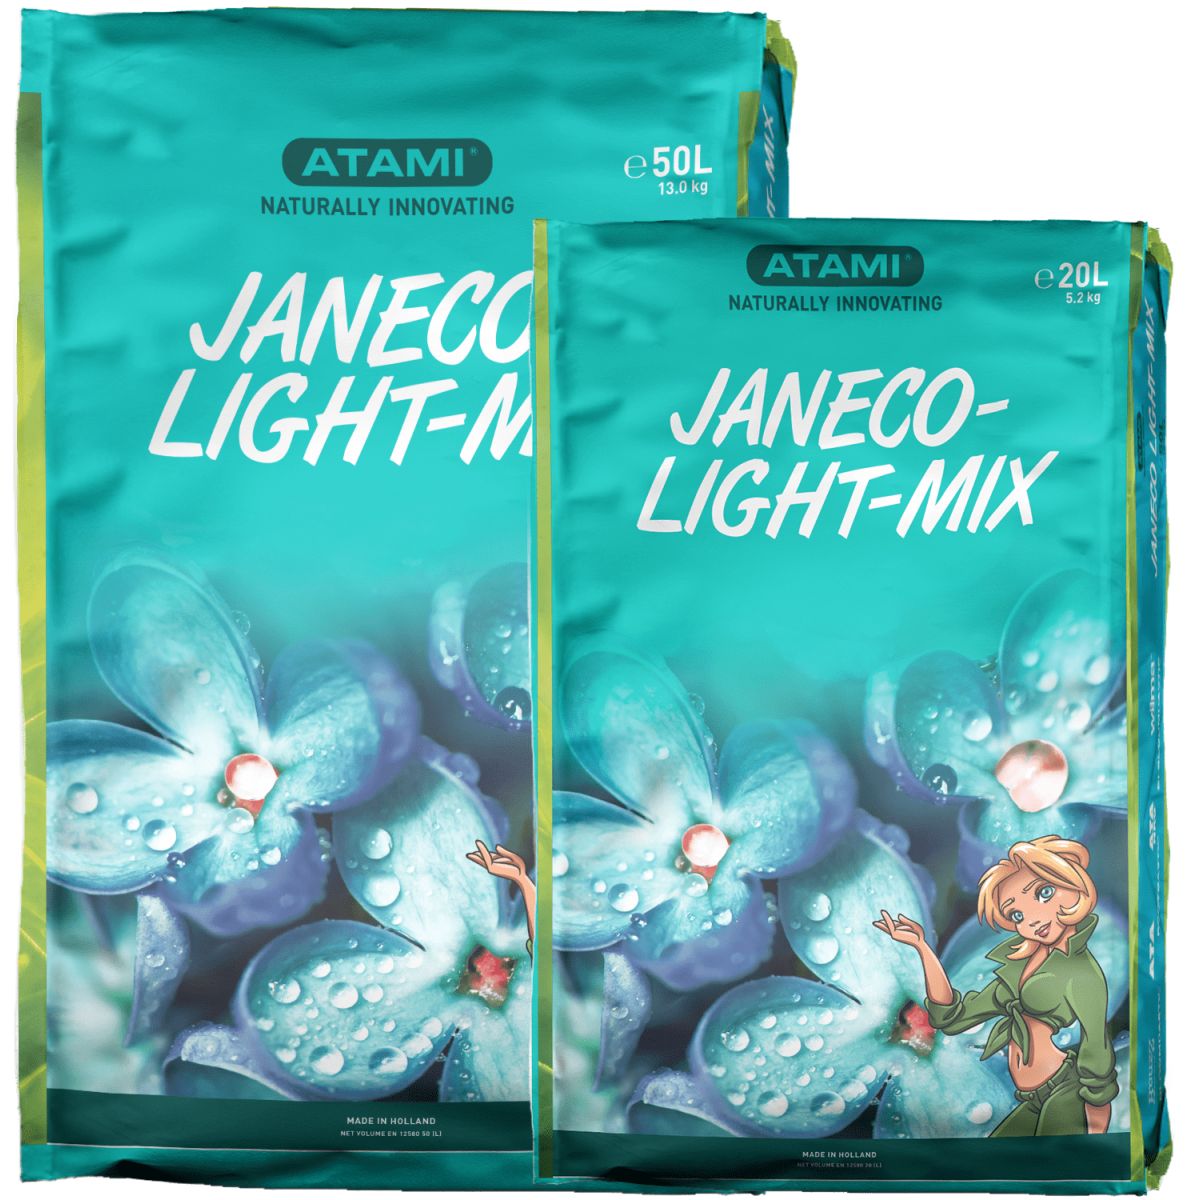 Janeco light mix 50 L